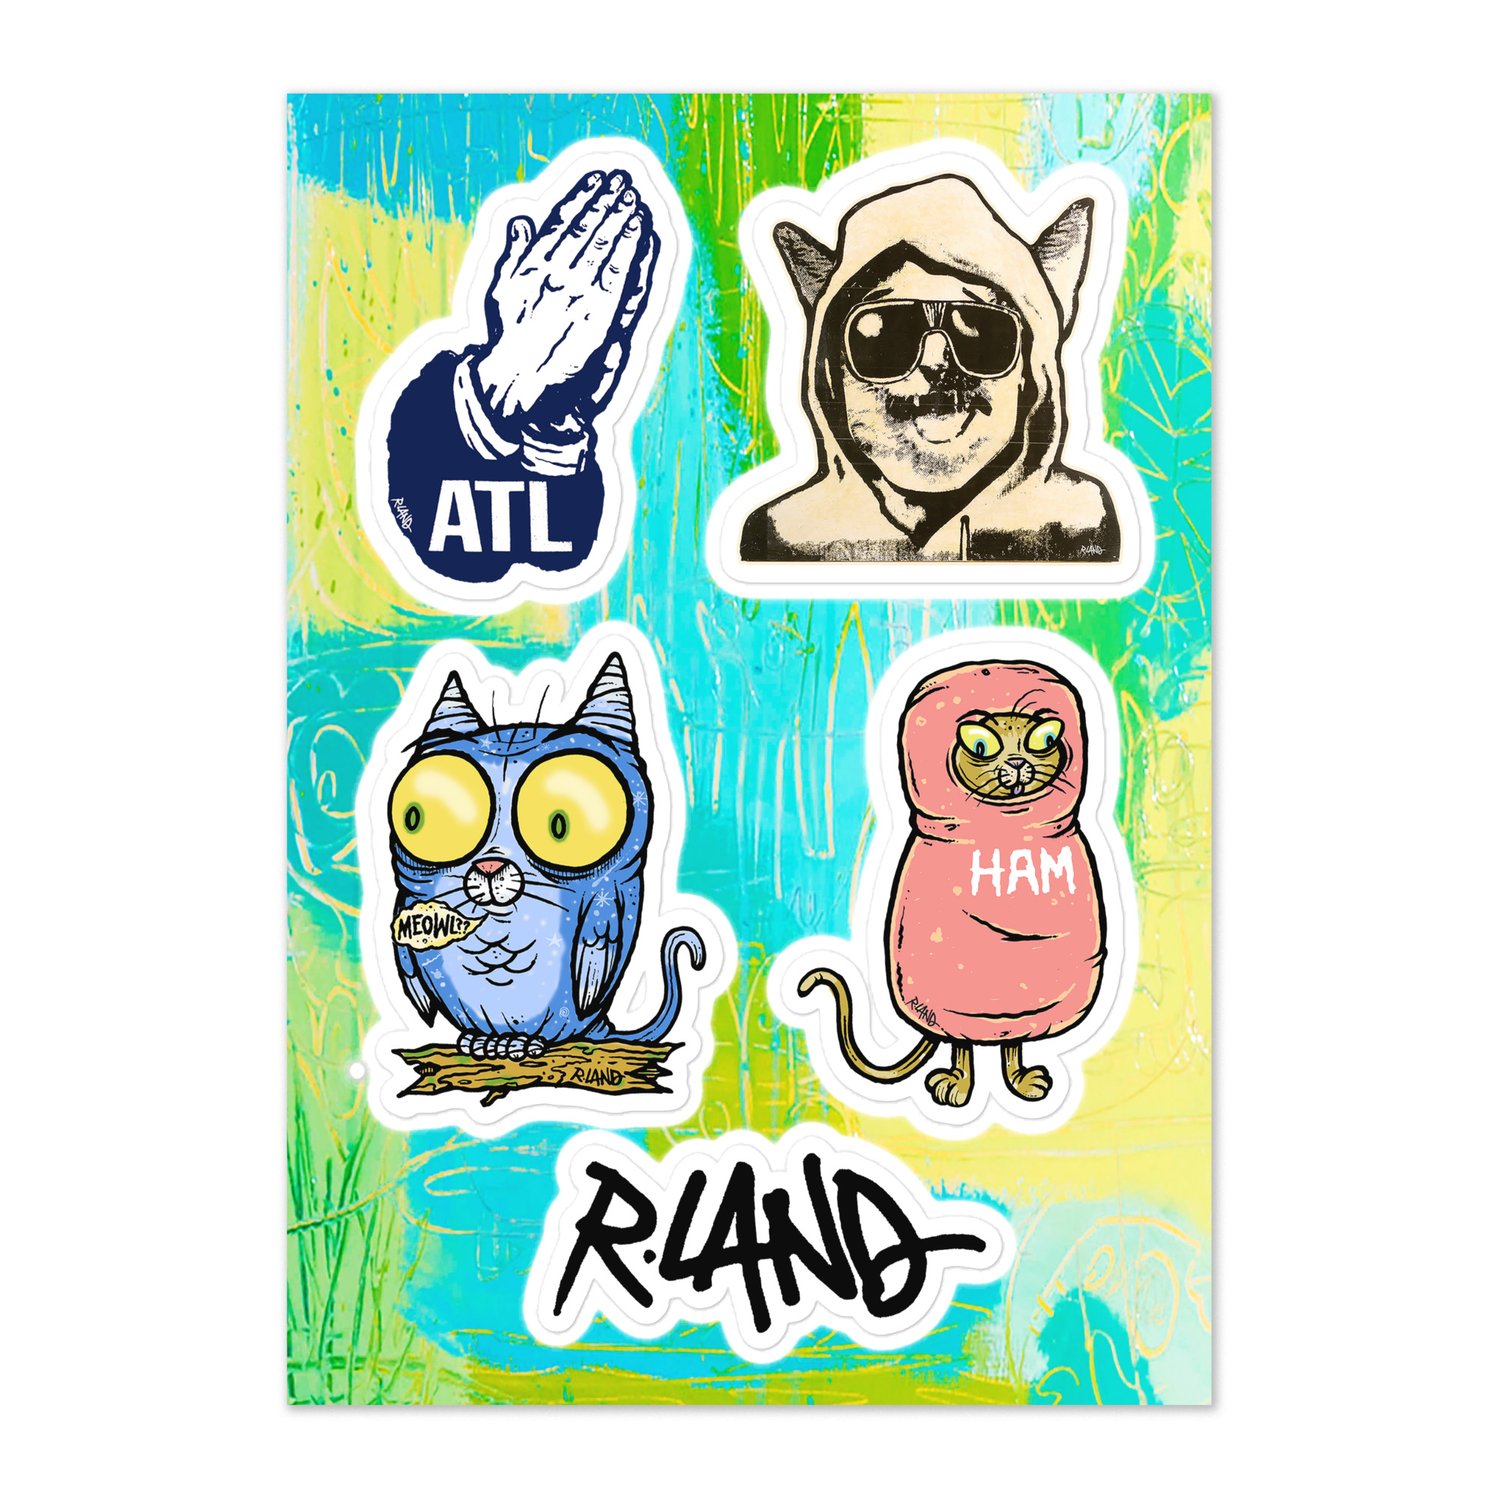 Image of NEW!! R. Land Multi-Sticker Sheet( Series 1)  